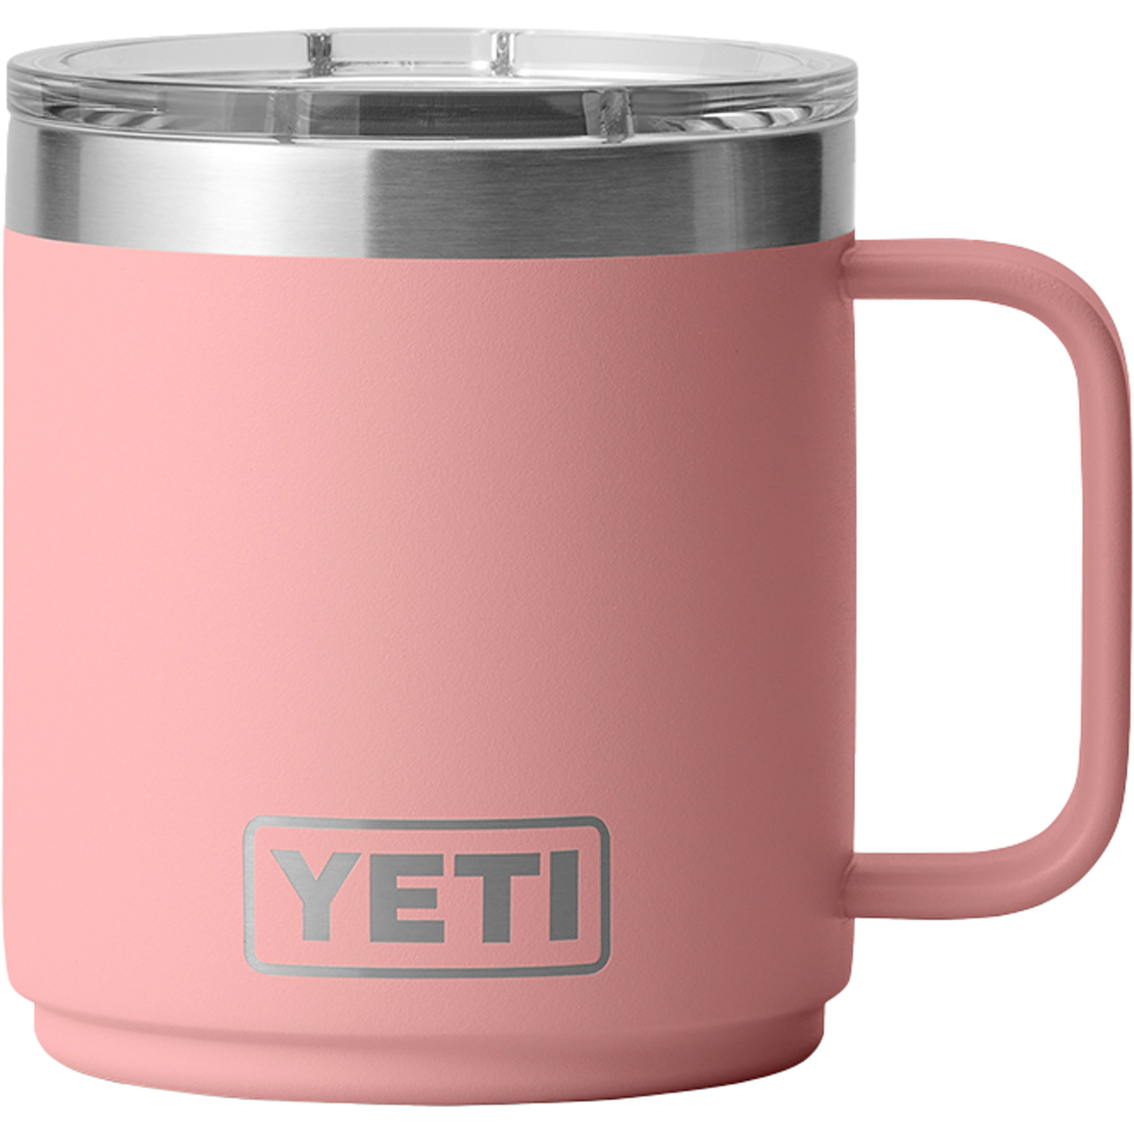 Yeti Rambler 10 oz. Mug - Image 1 of 3